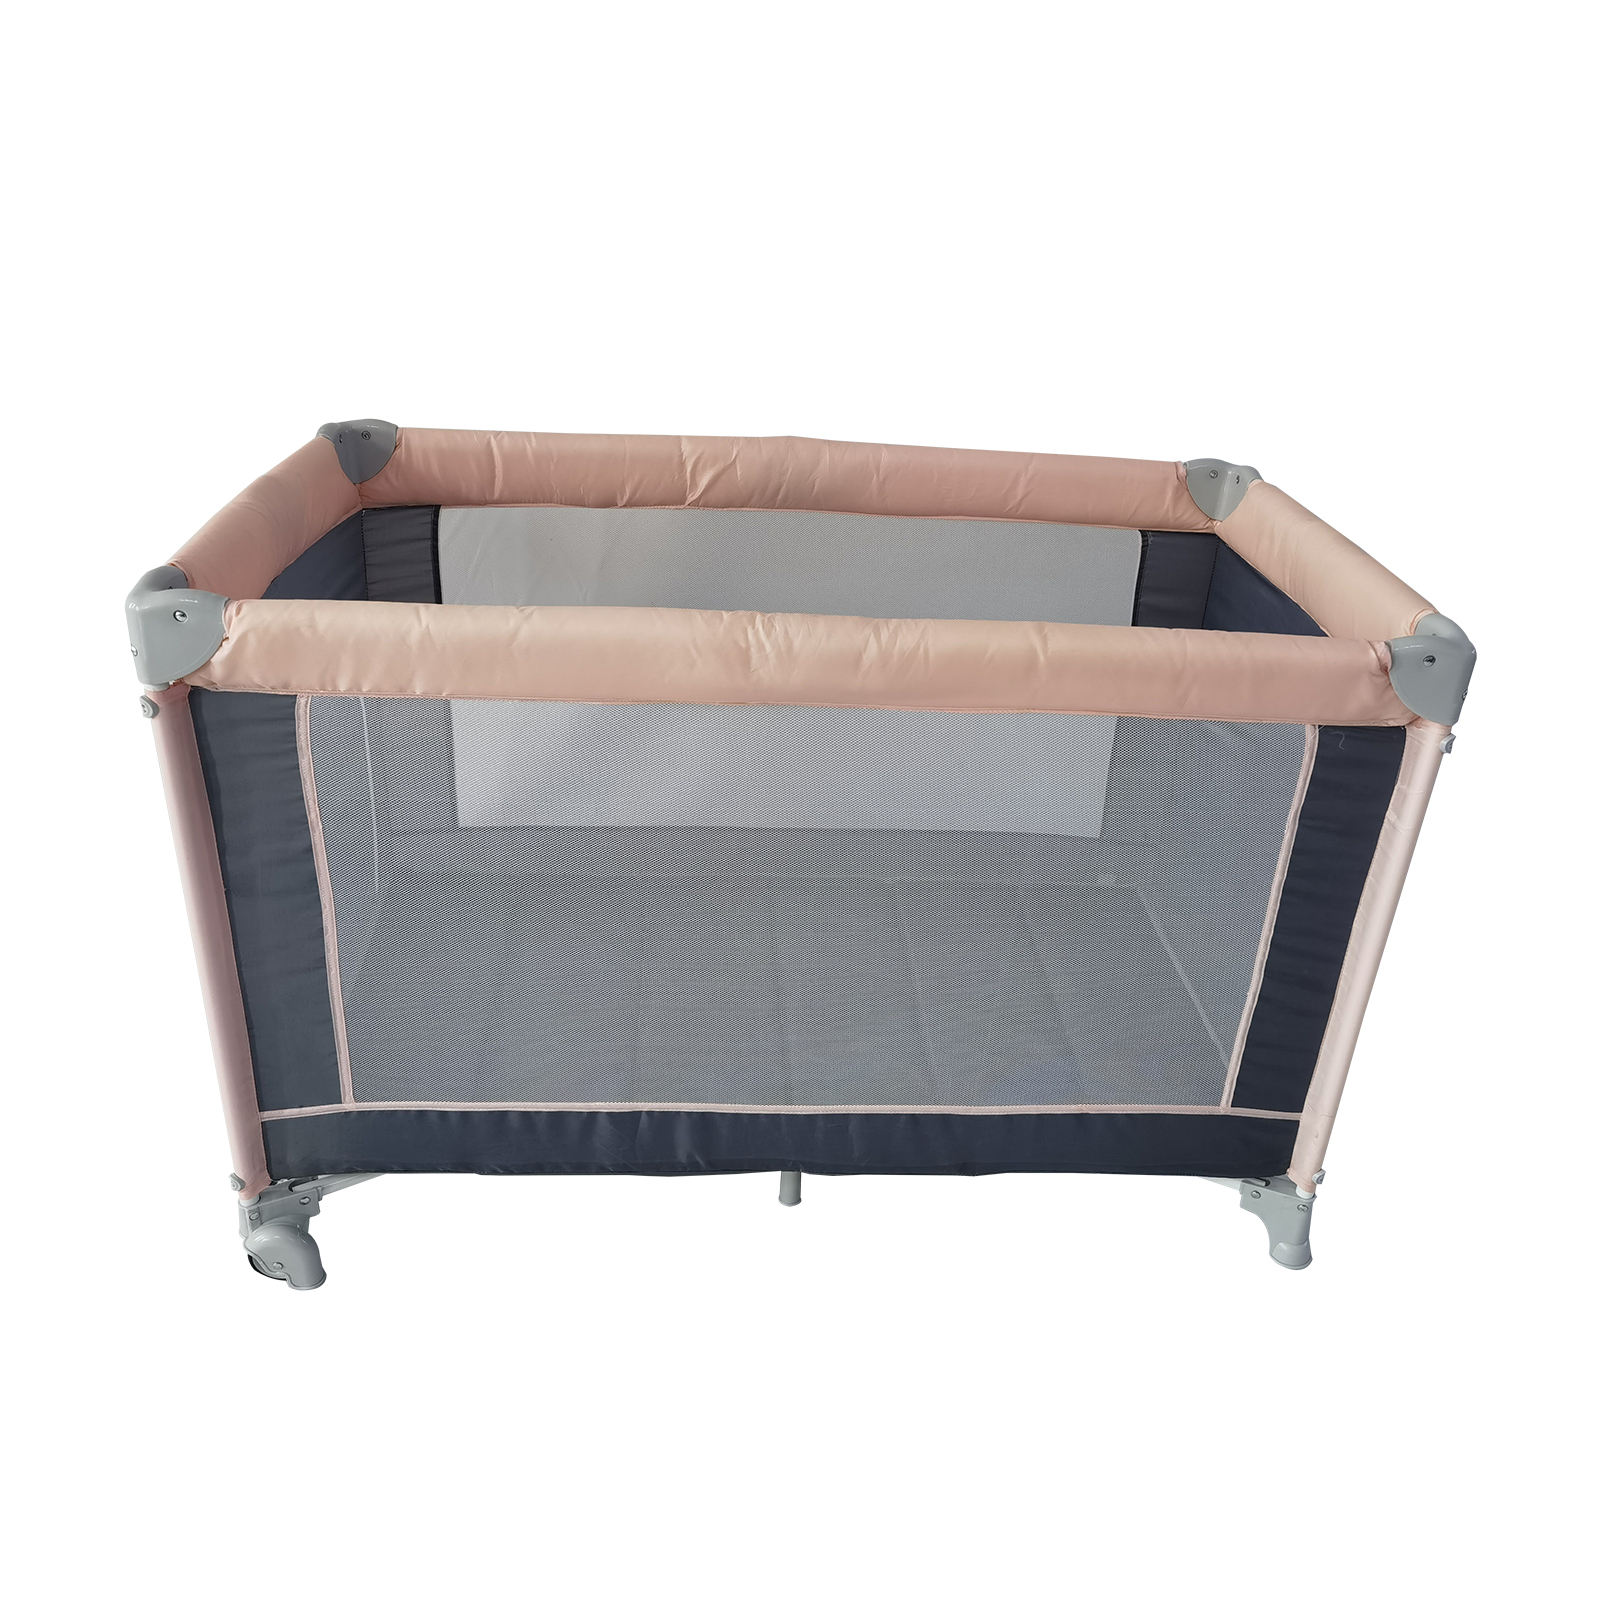 Multifunctional OEM Portable Baby Playpen Bed